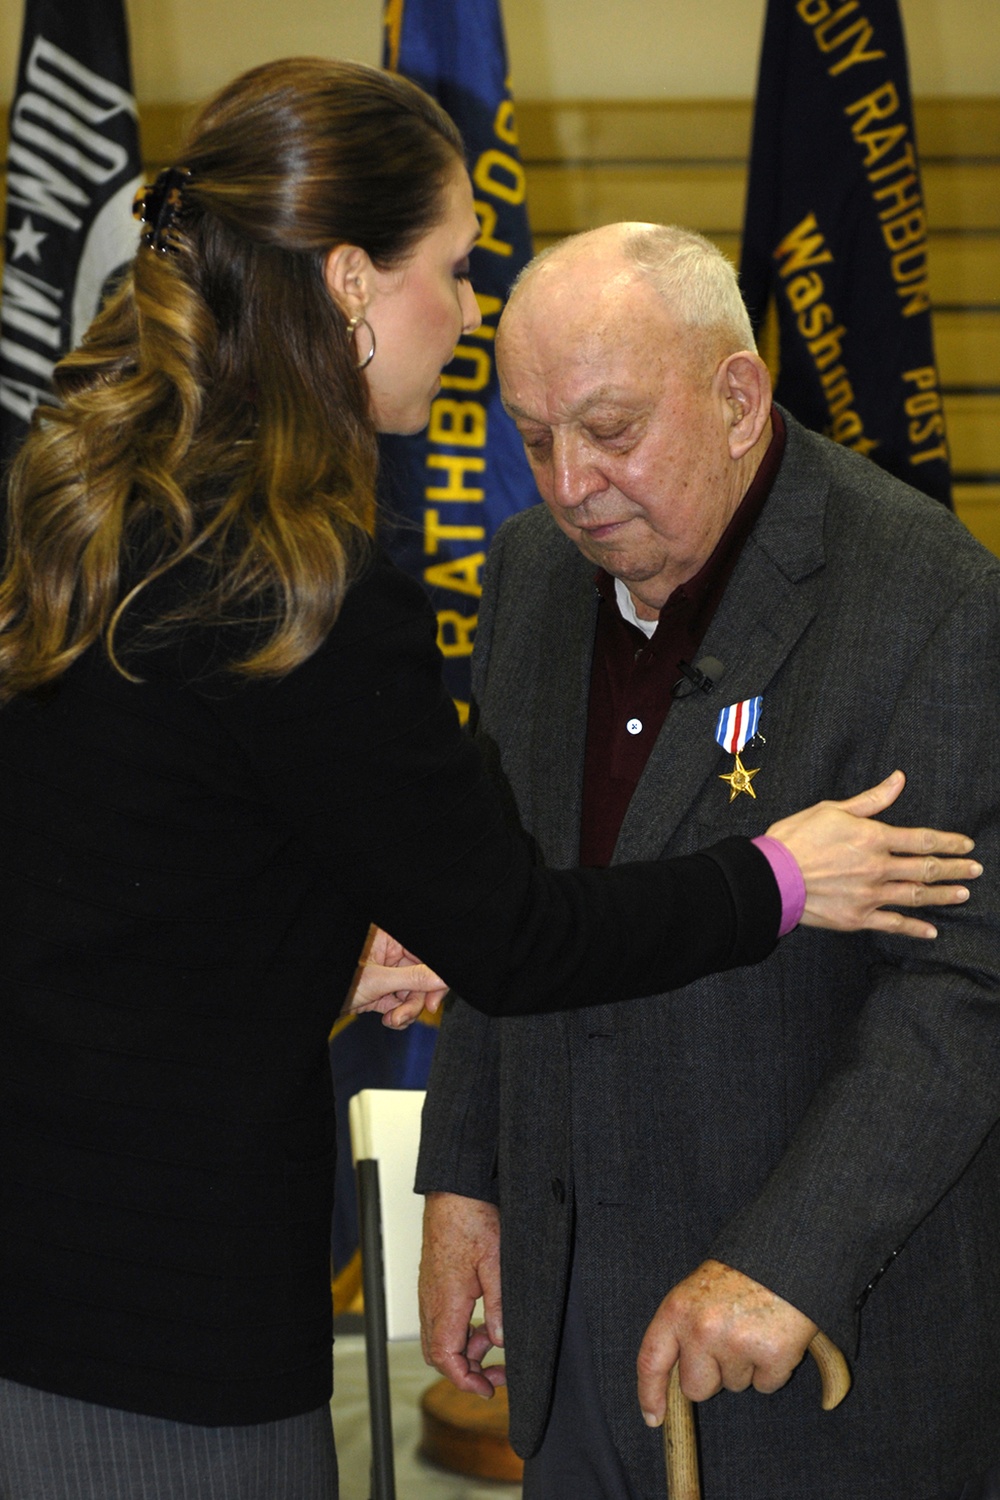 Korean War veteran receives long overdue Silver Star Medal